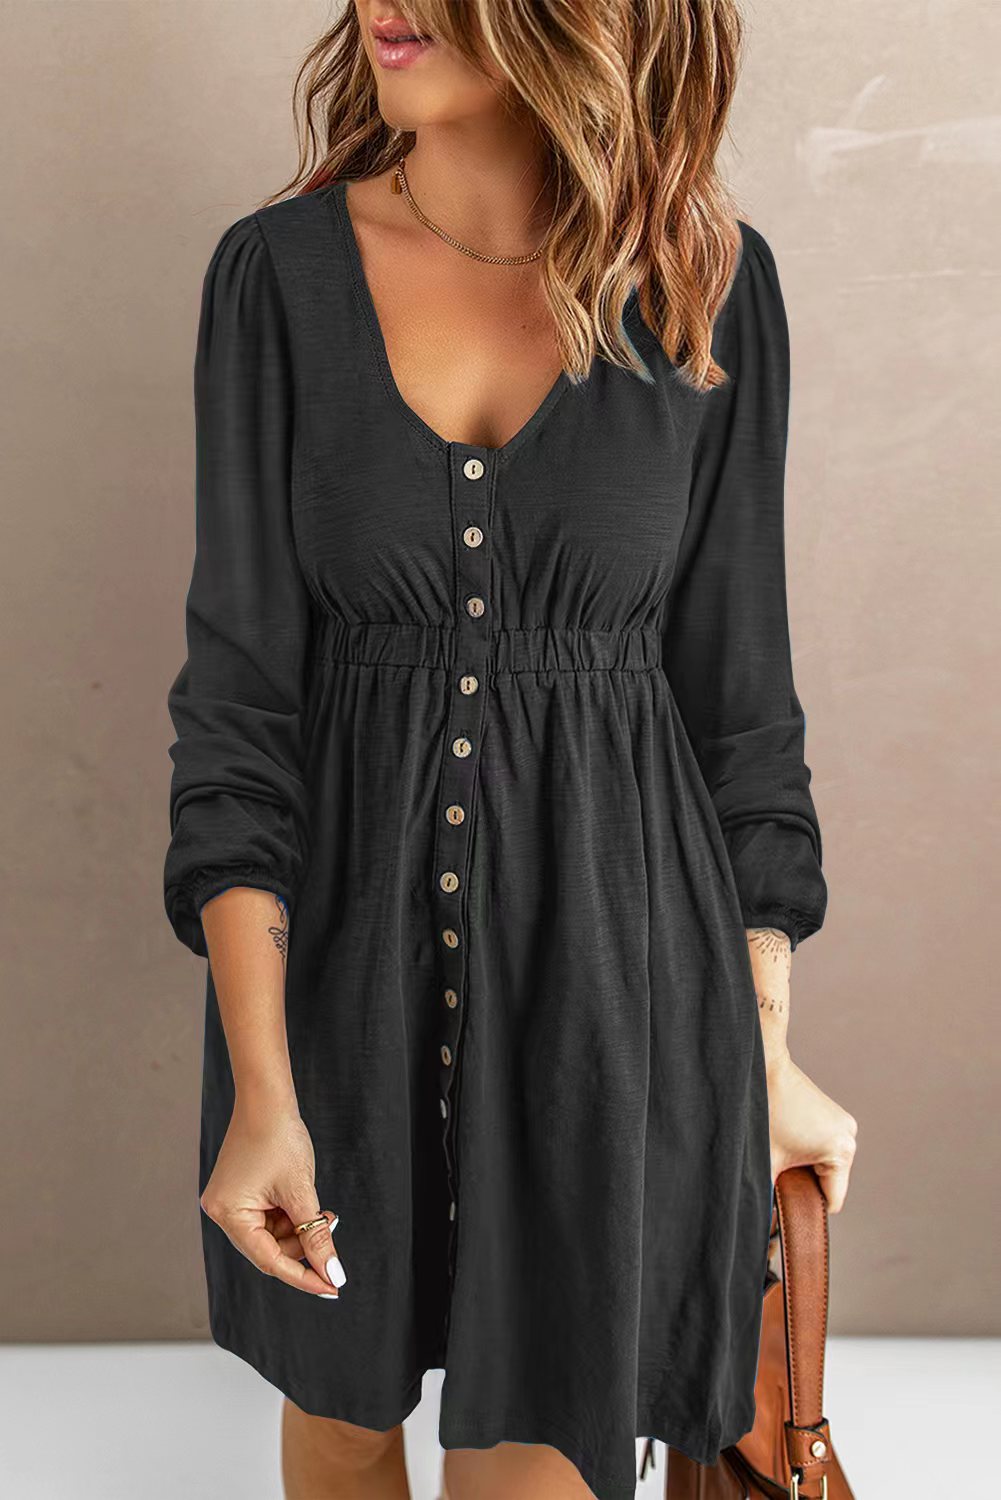 Mady Long Sleeve Mini Dress - Online Exclusive | Sparkles & Lace Boutique